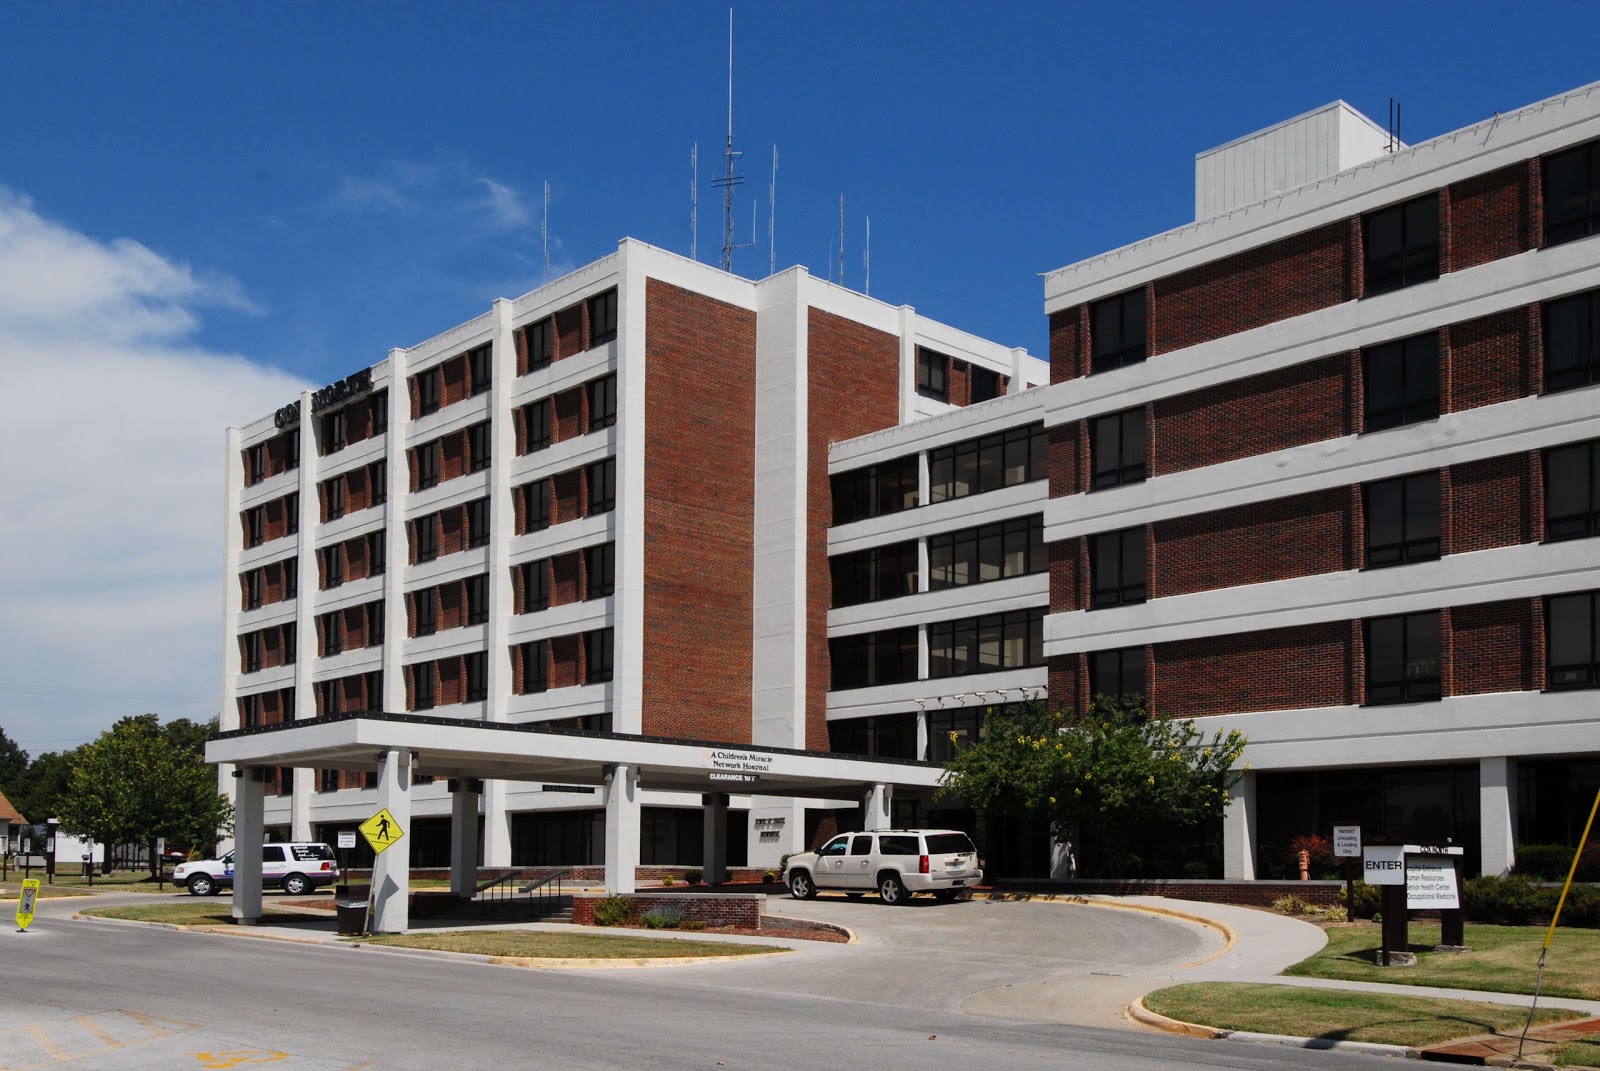 CoxHealth - Cox Medical Centers